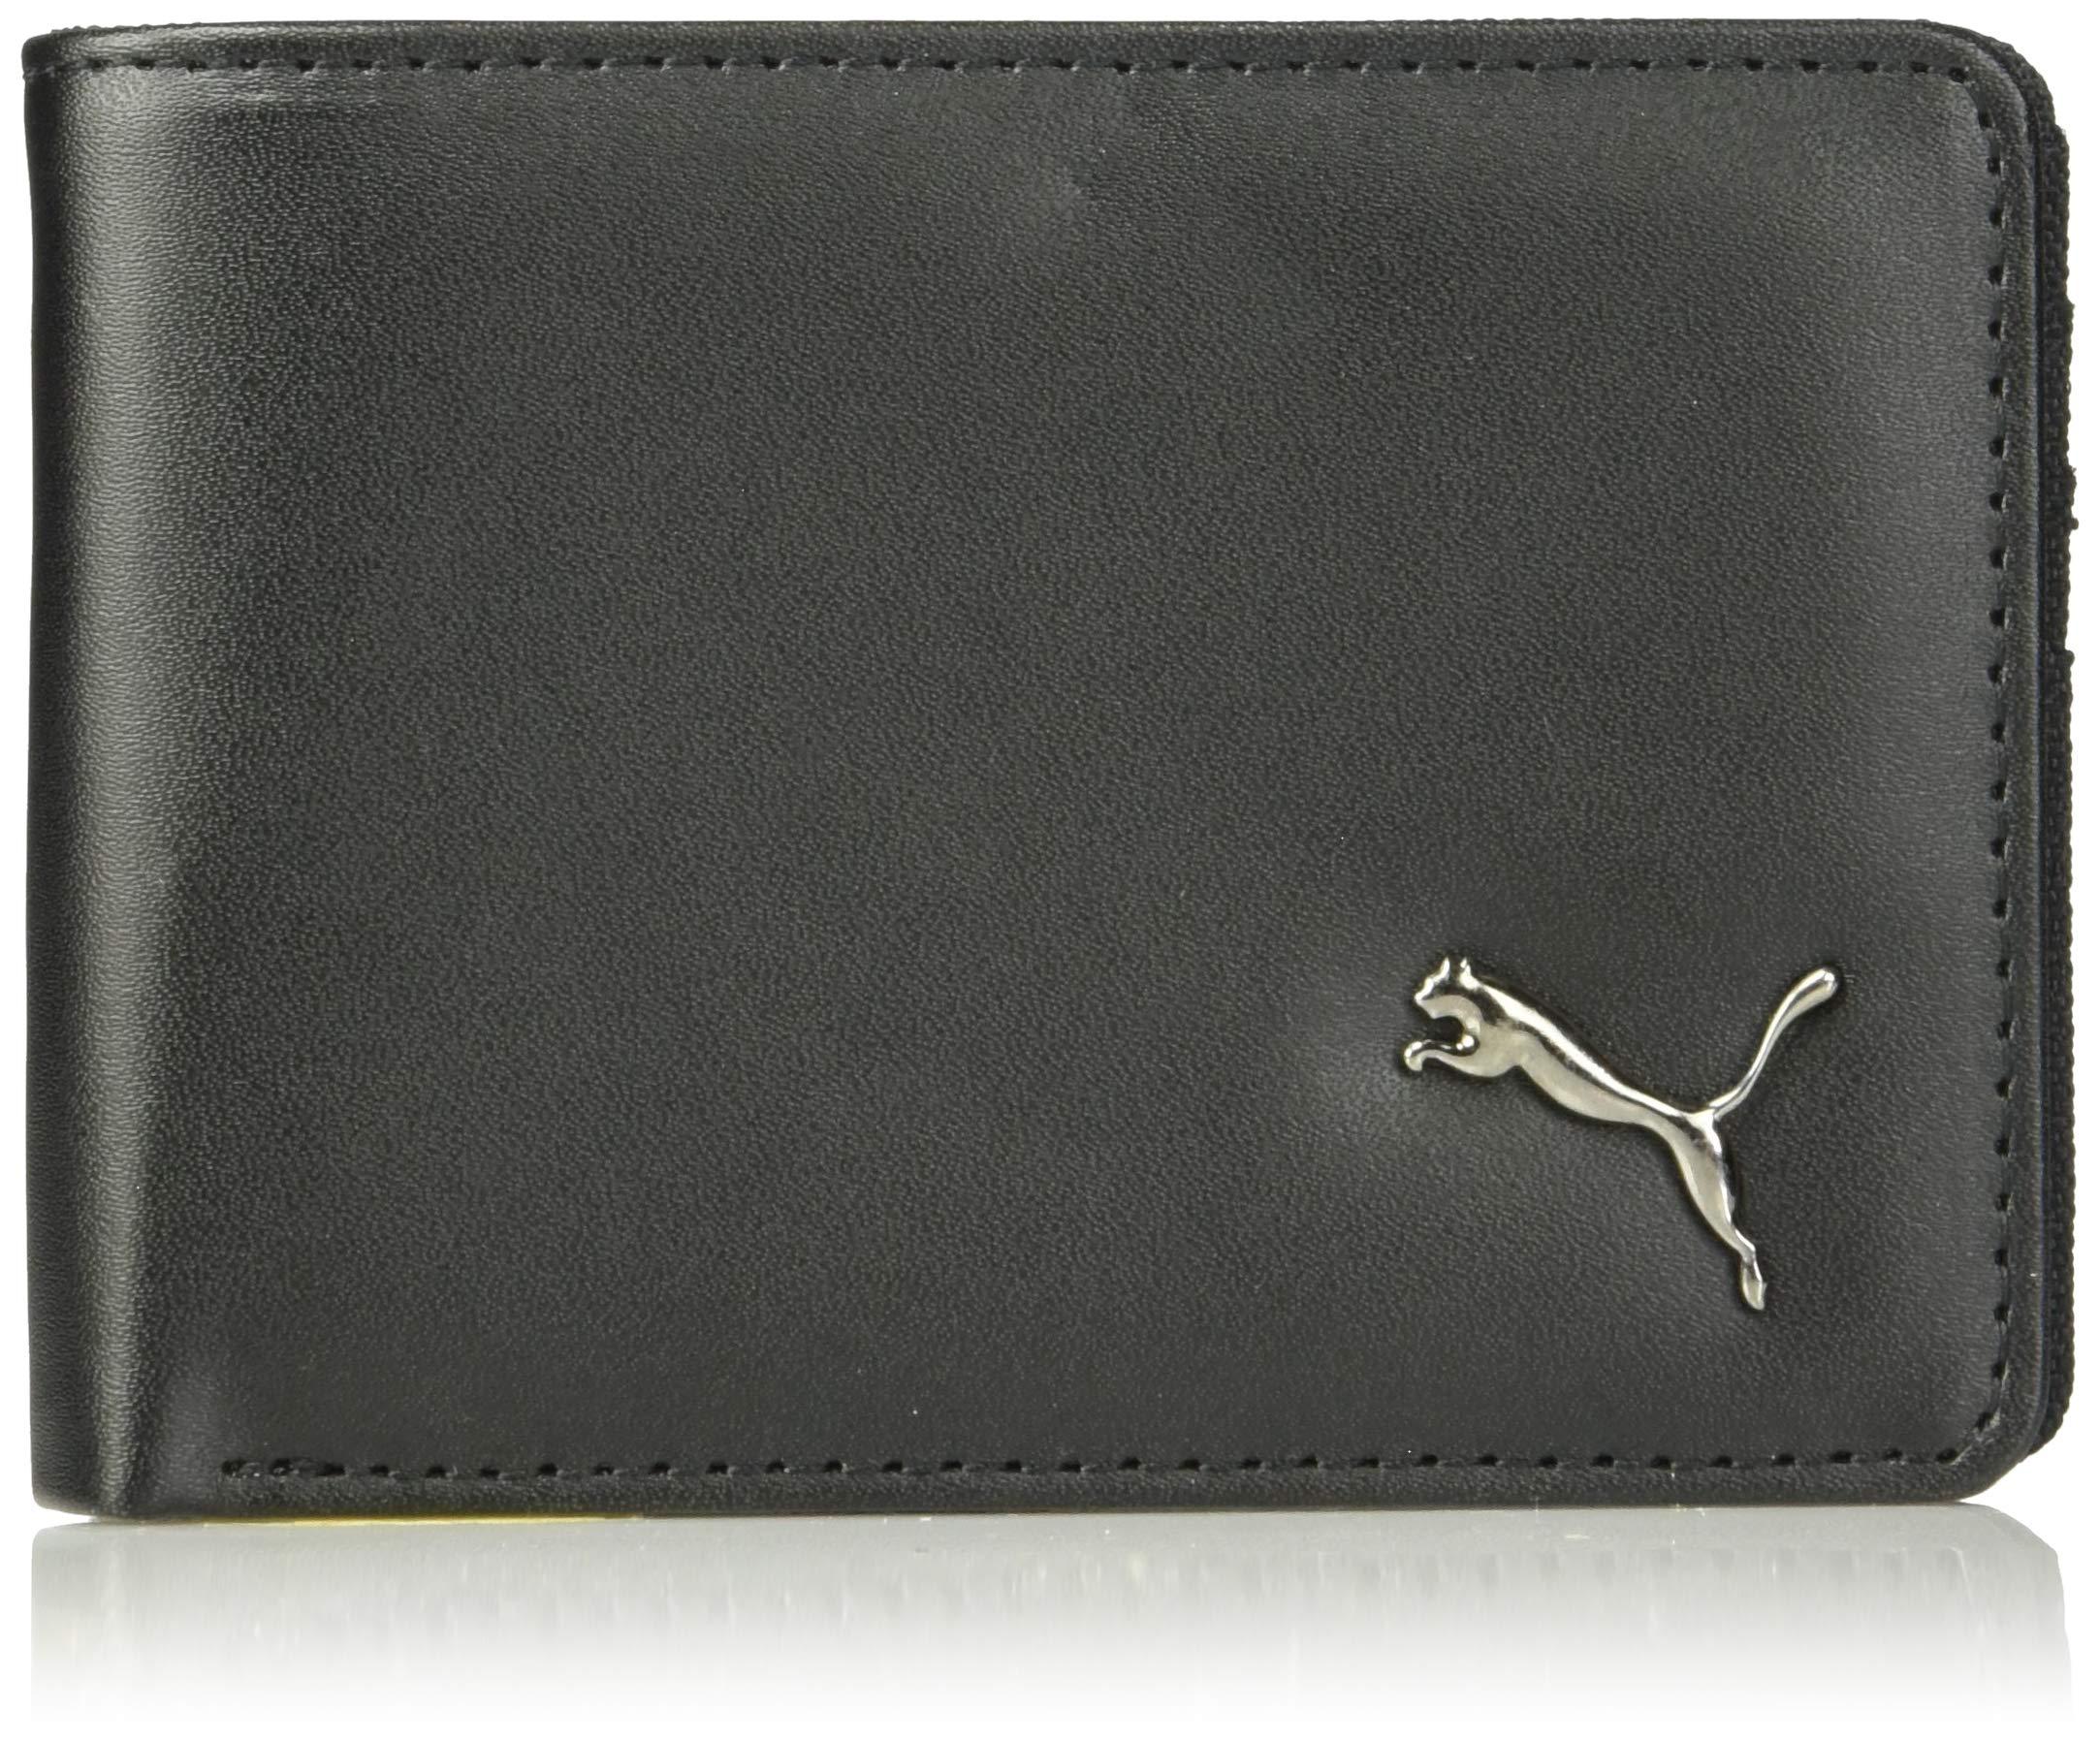 puma wallet online